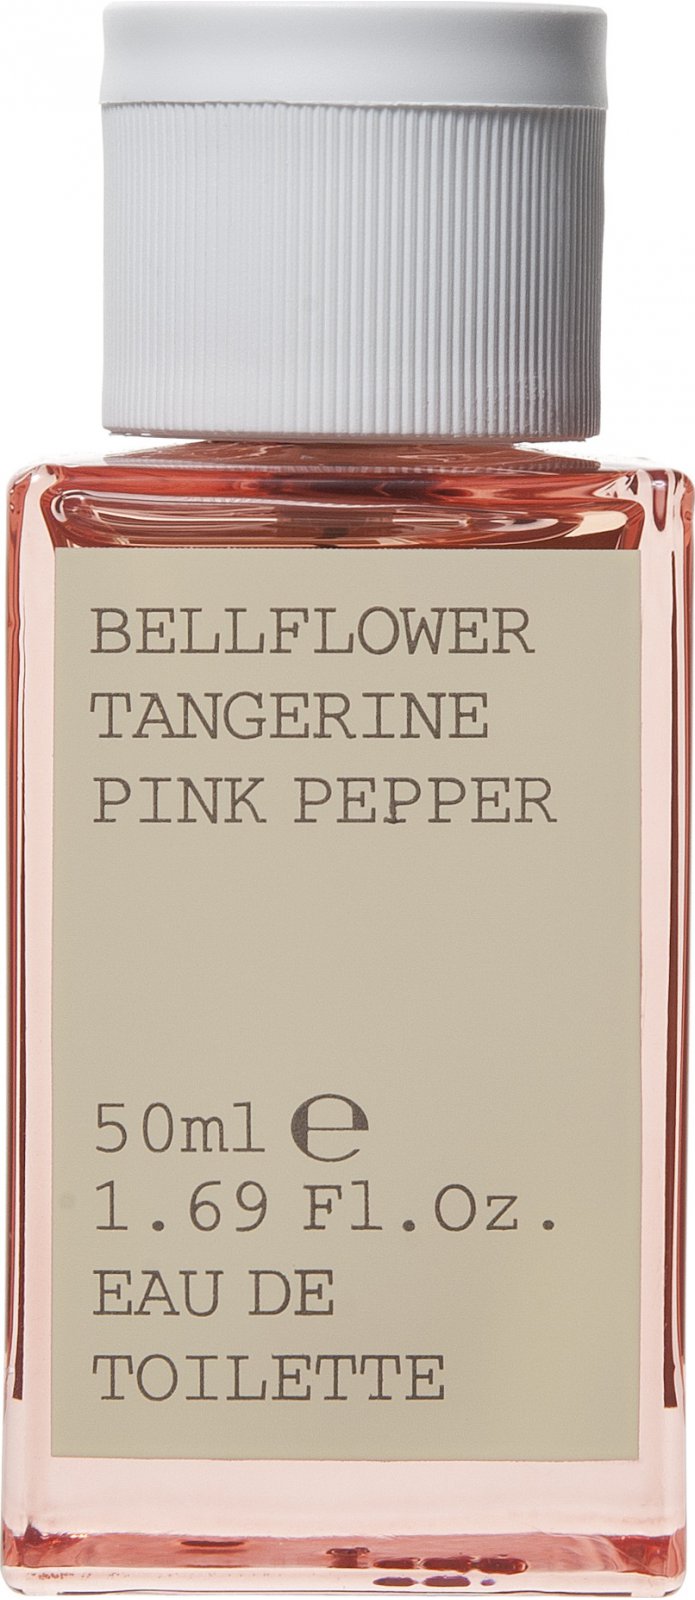 korres bellflower tangerine pink pepper eau de toilette